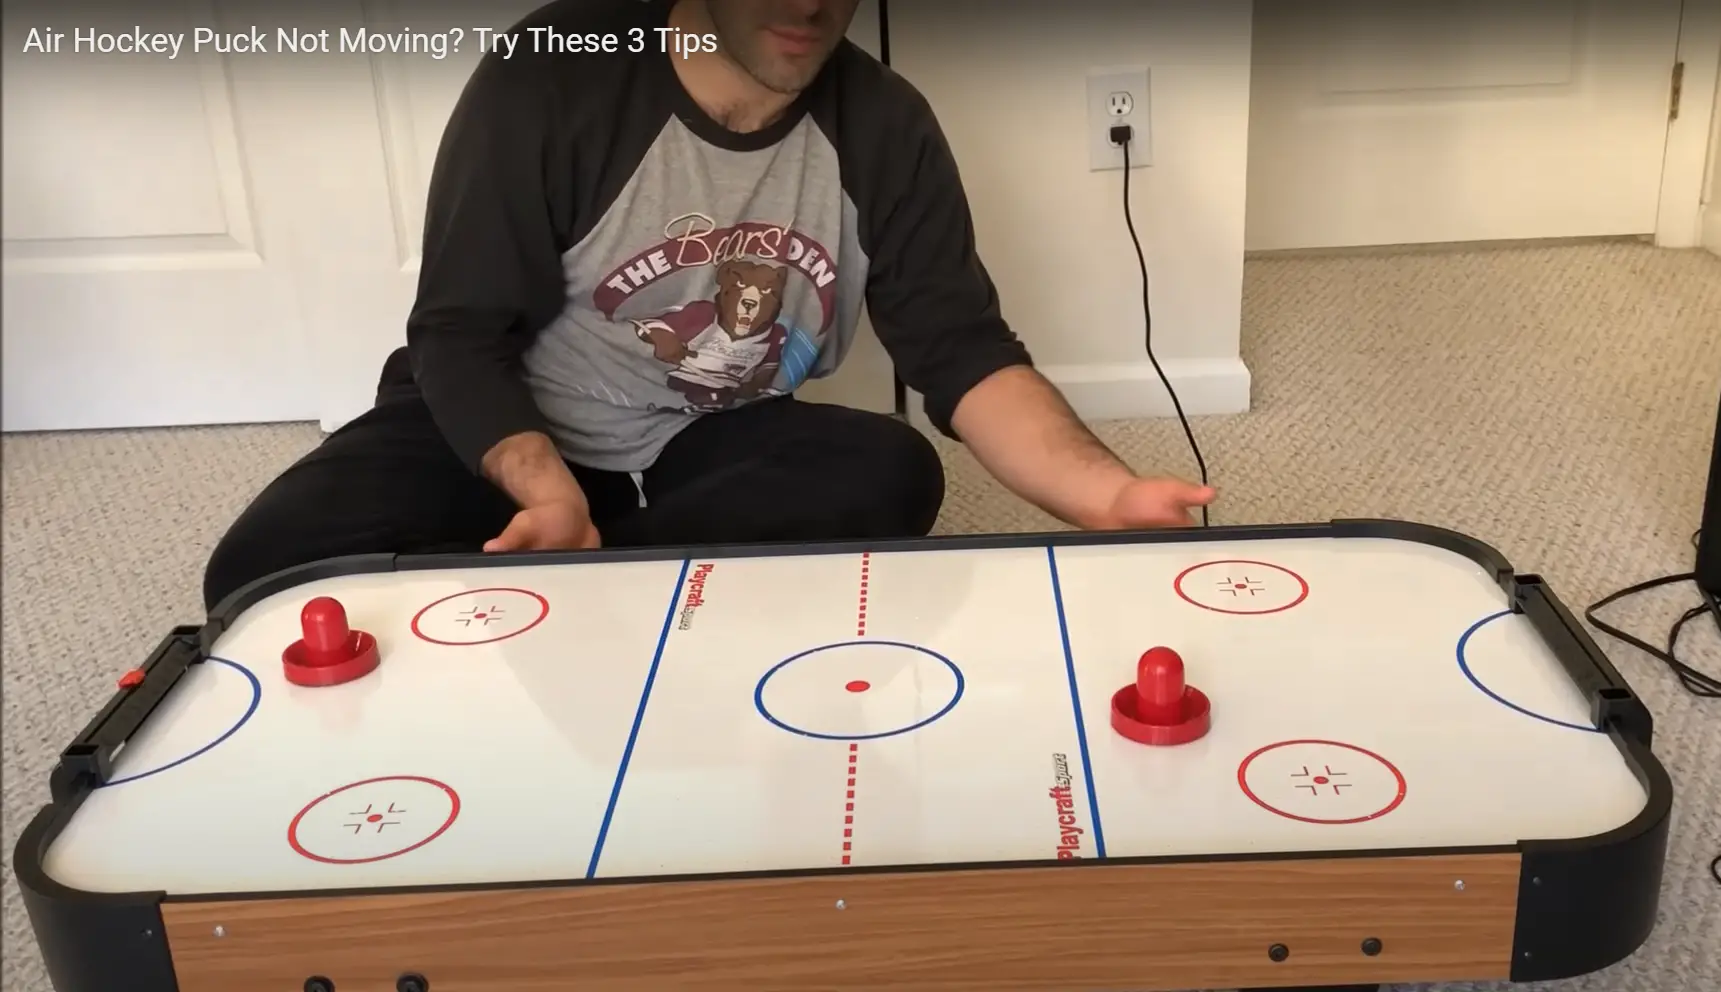 How to Make Air Hockey Table Slide Better